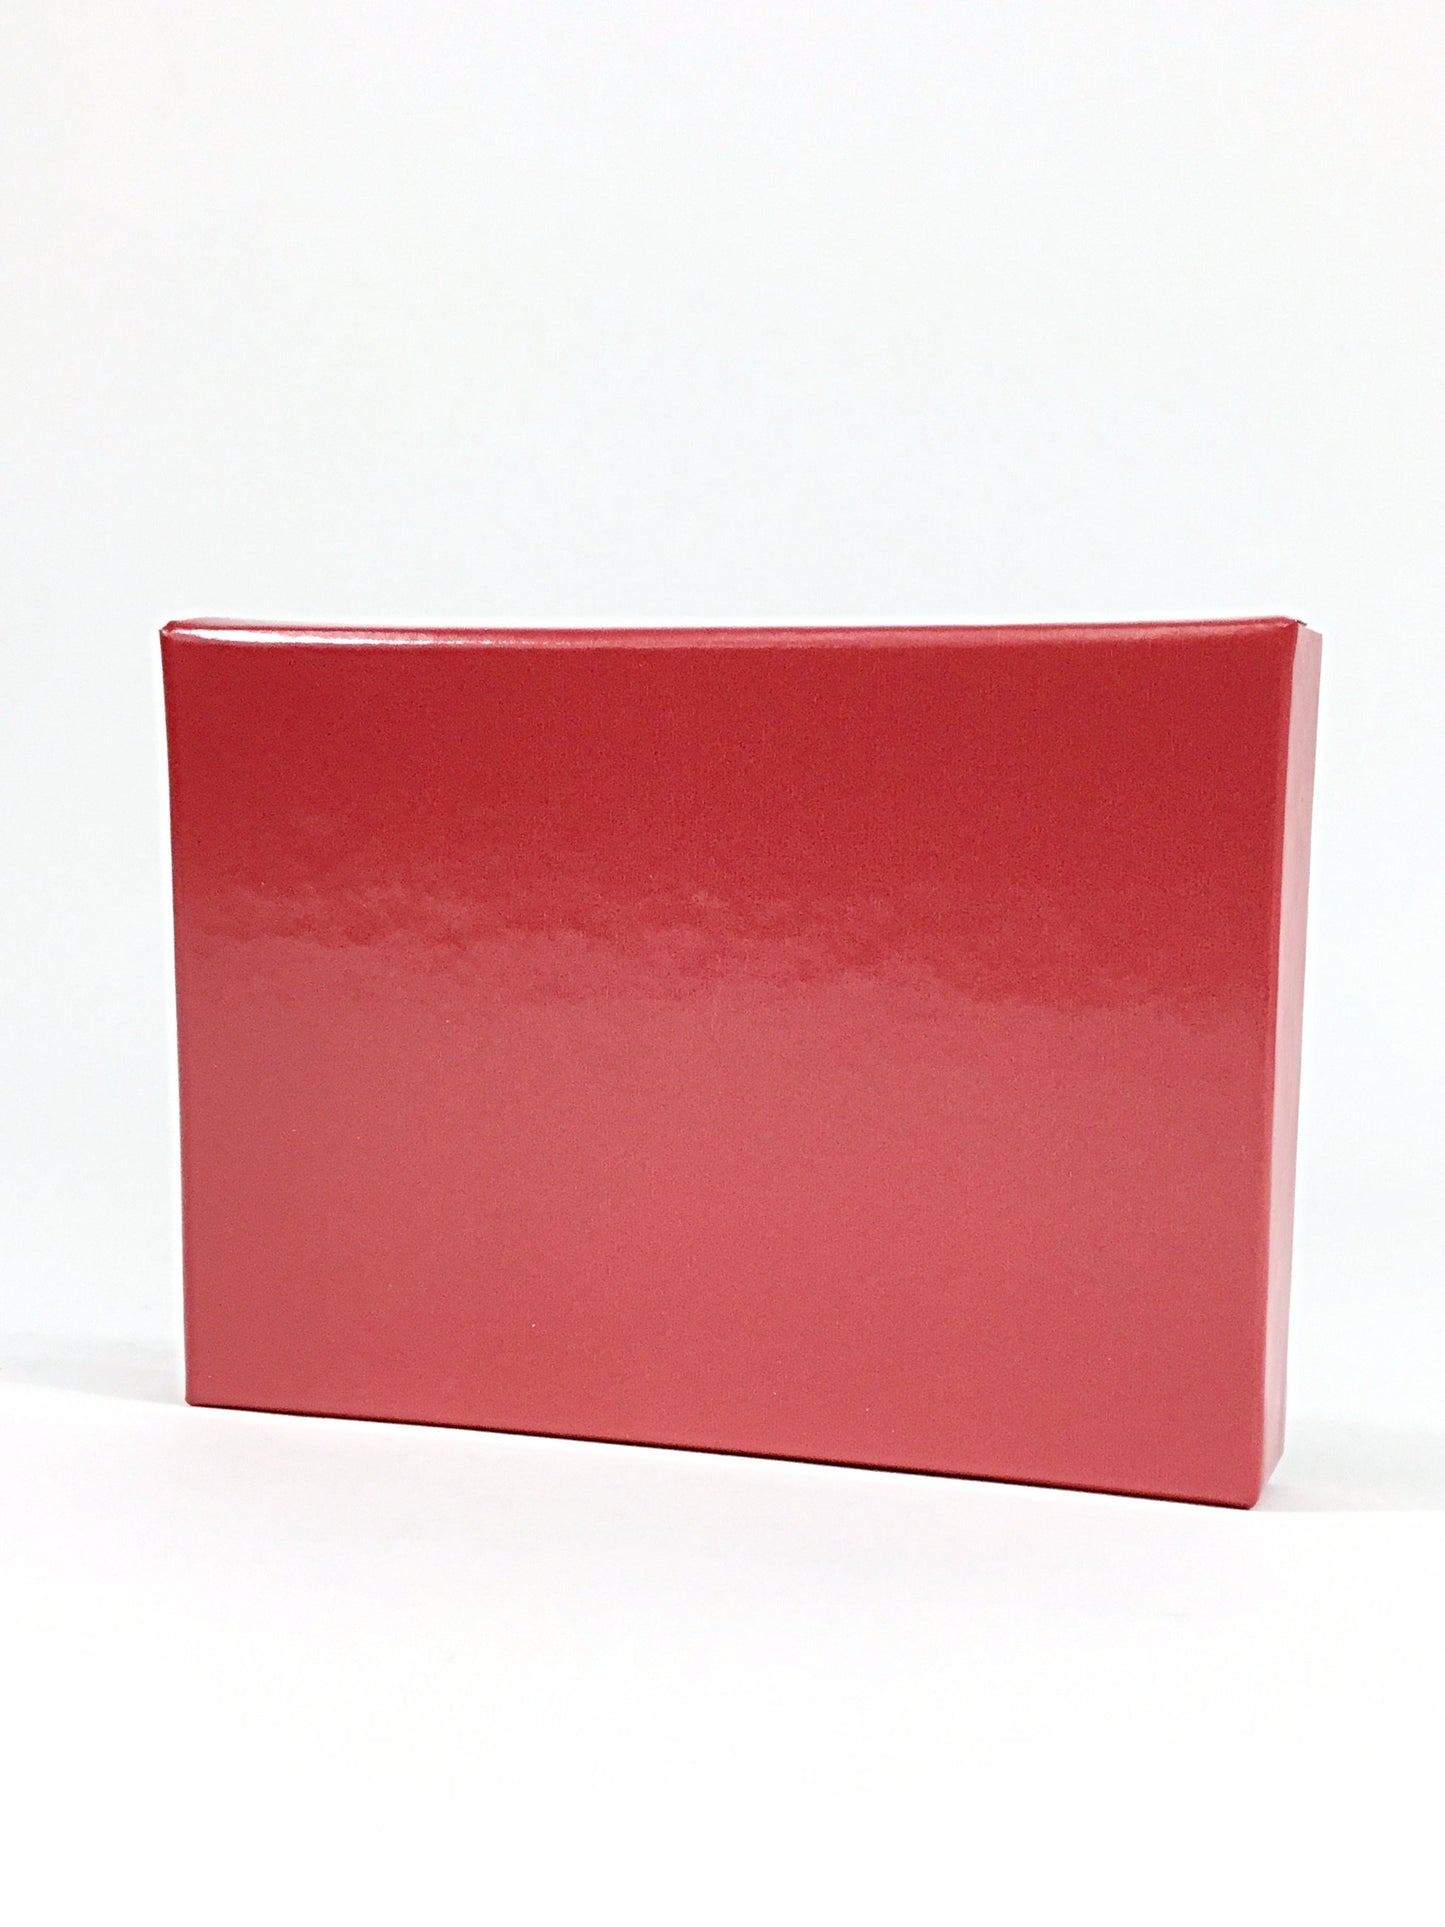 Barrie Store Gift Card Box - - image_1a0f95c0-11ac-41a2-ac92-d85708e1cf14